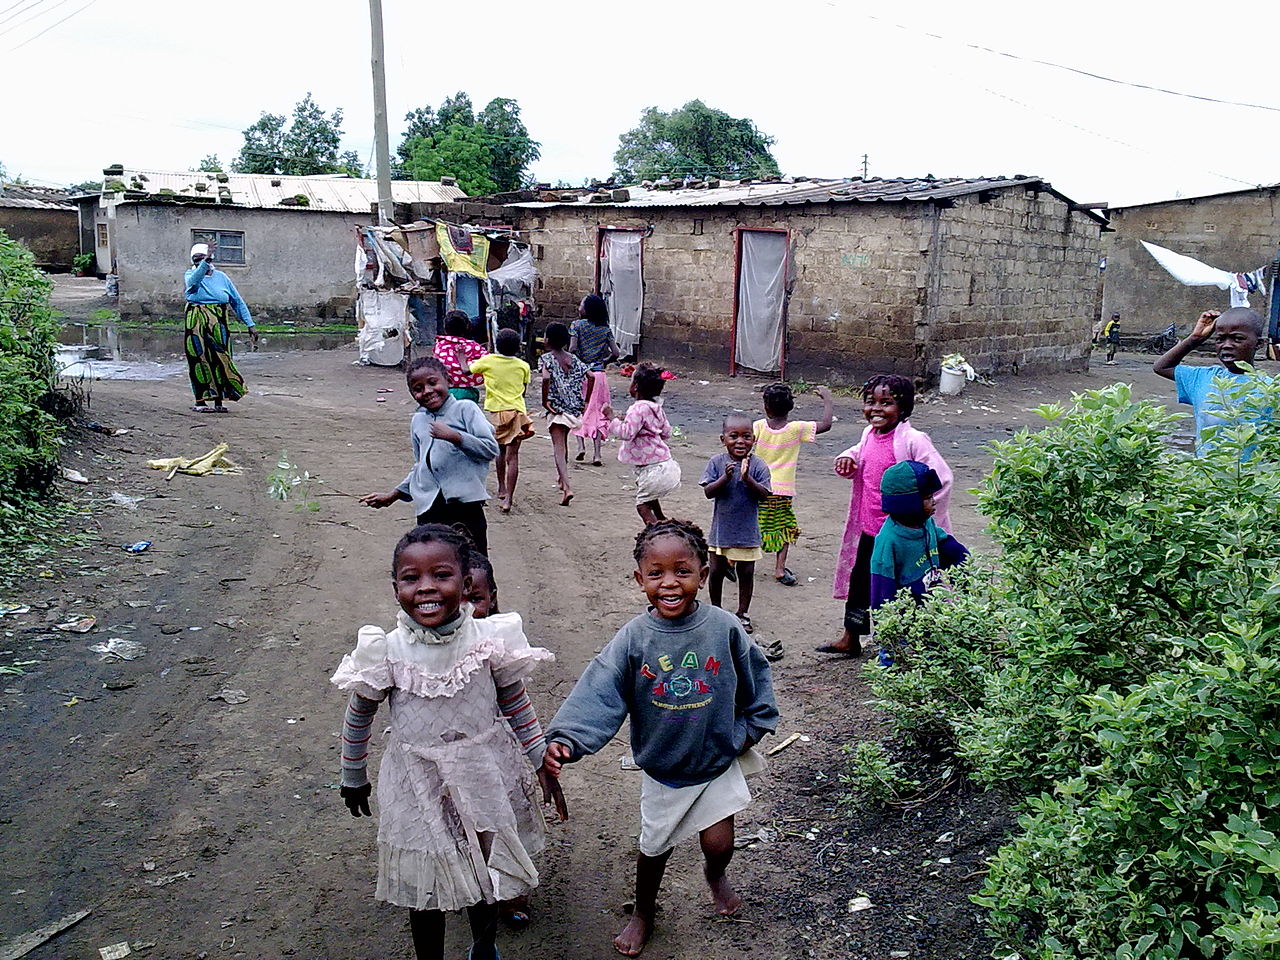 Kinder in einem Dorf in Sambia (c) SuSanA CC BY SA 2.0